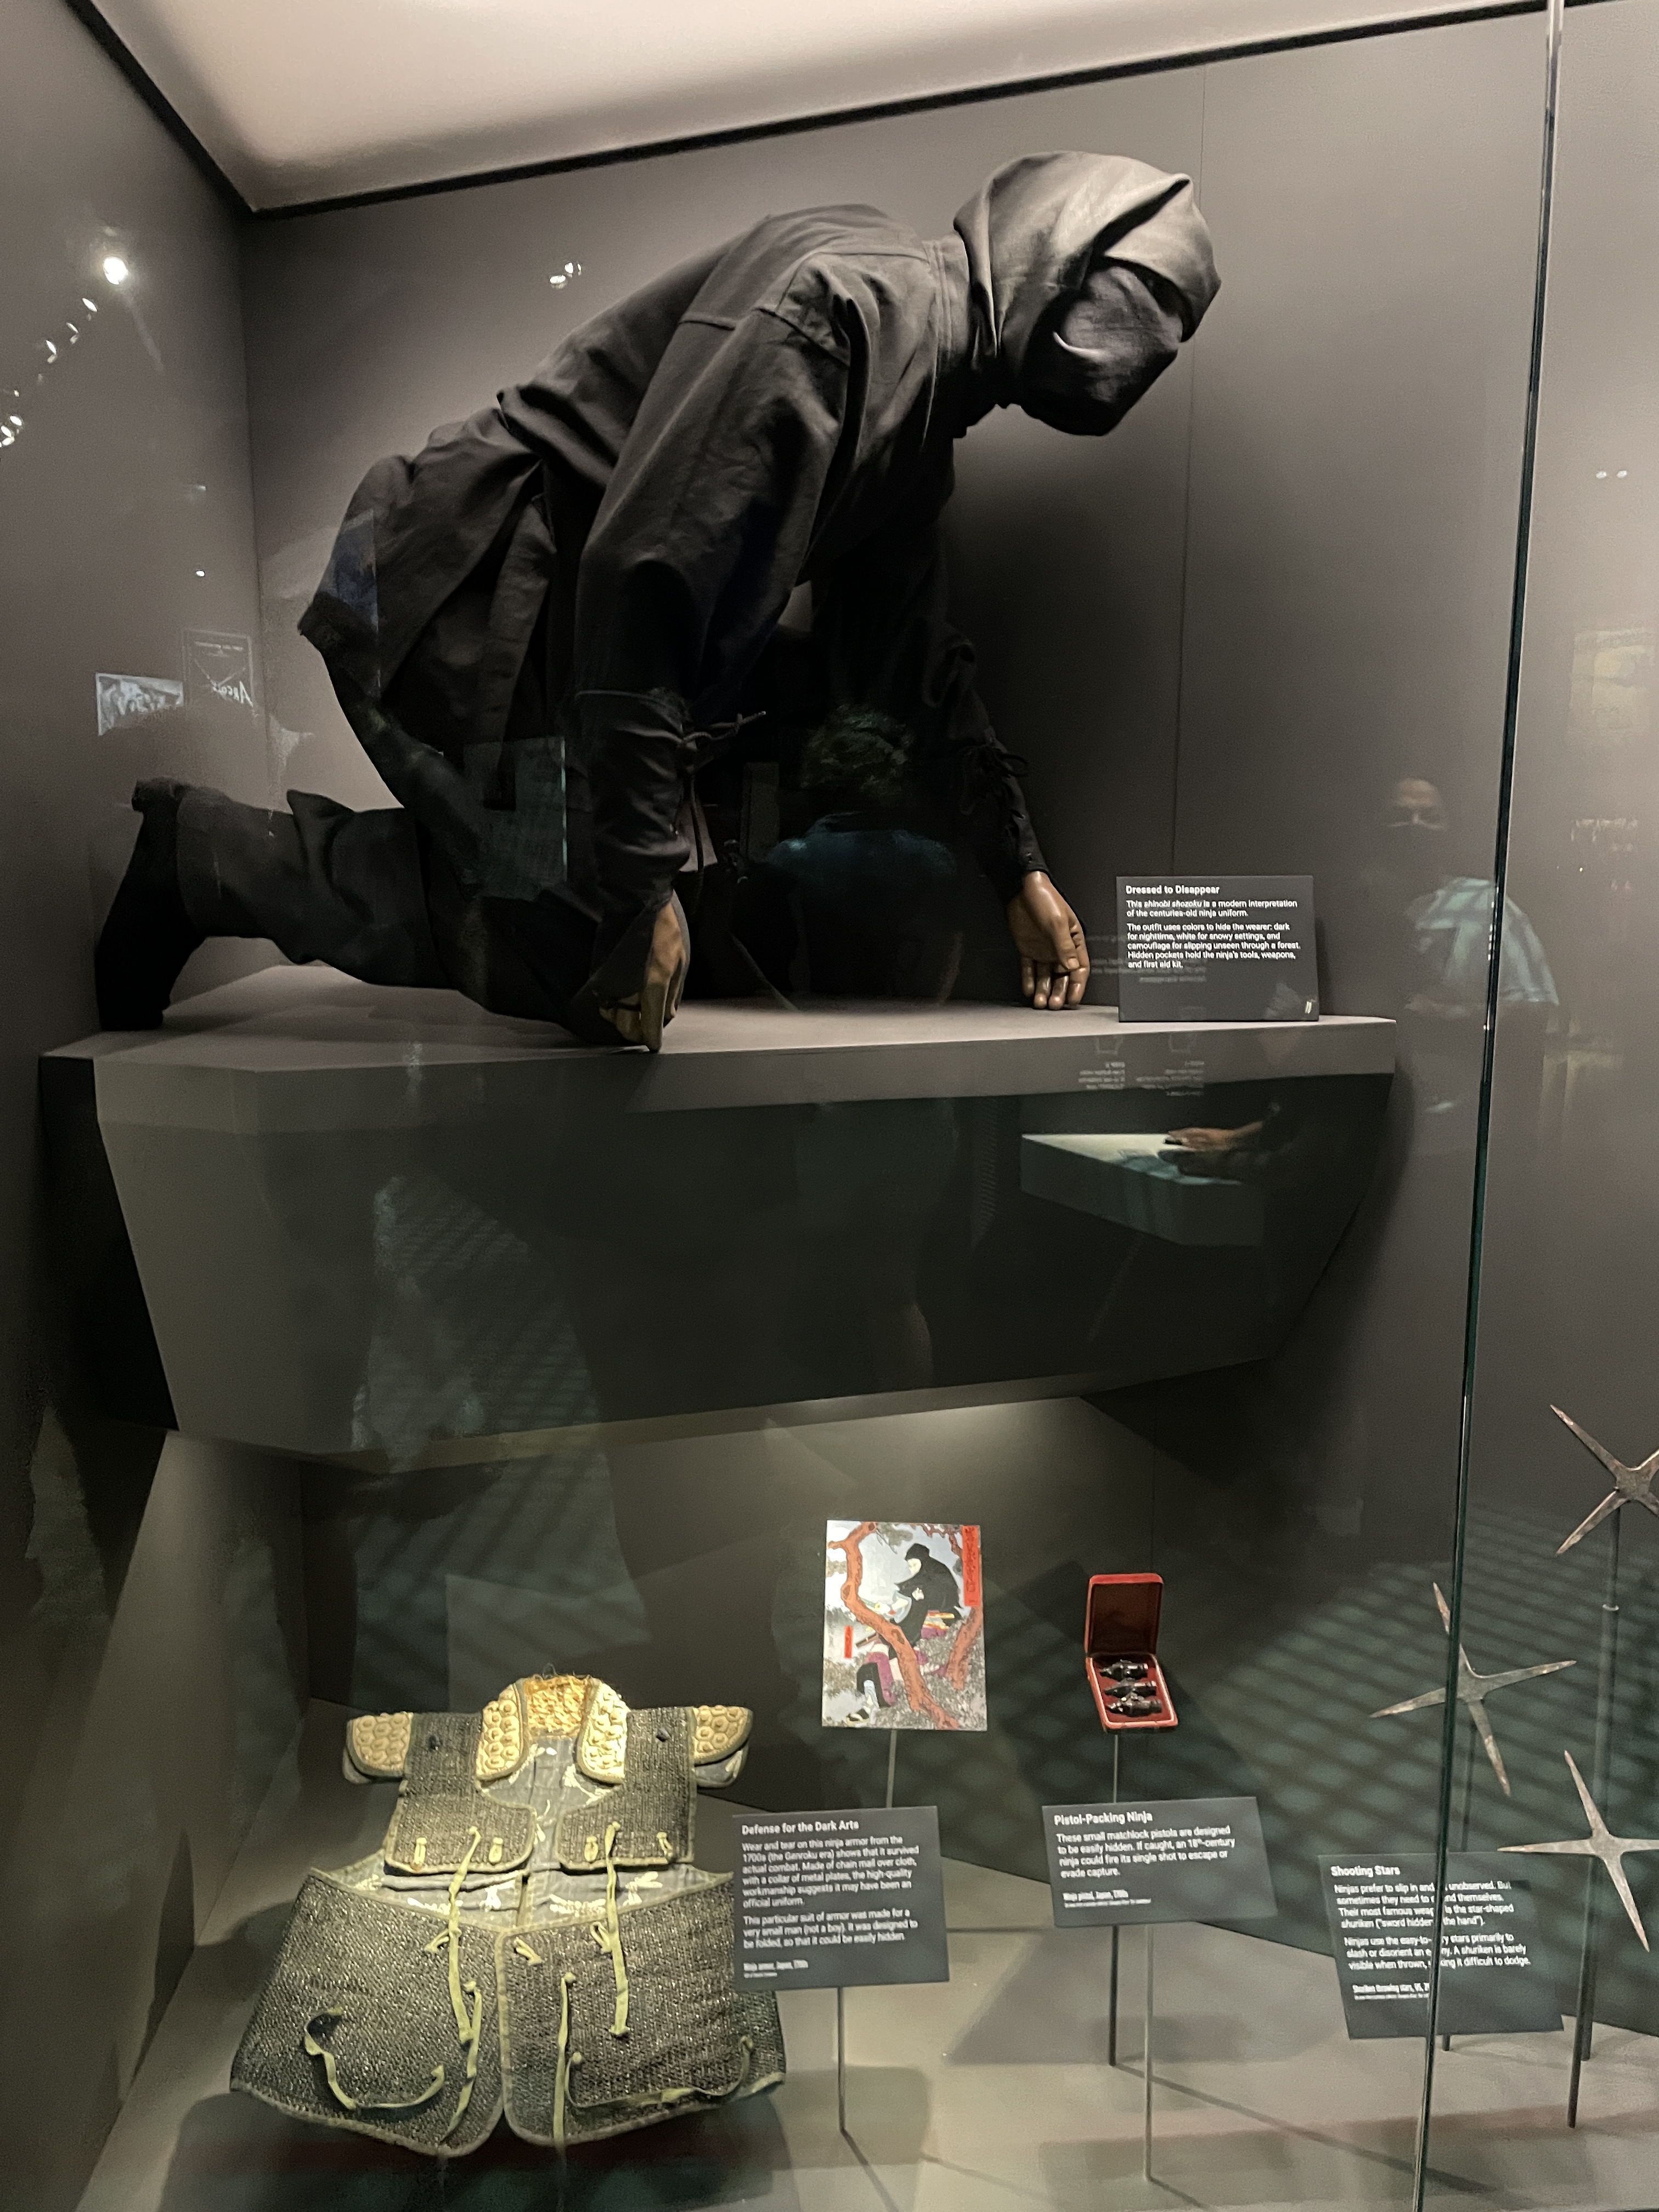 Exhibit in the International Spy Museum